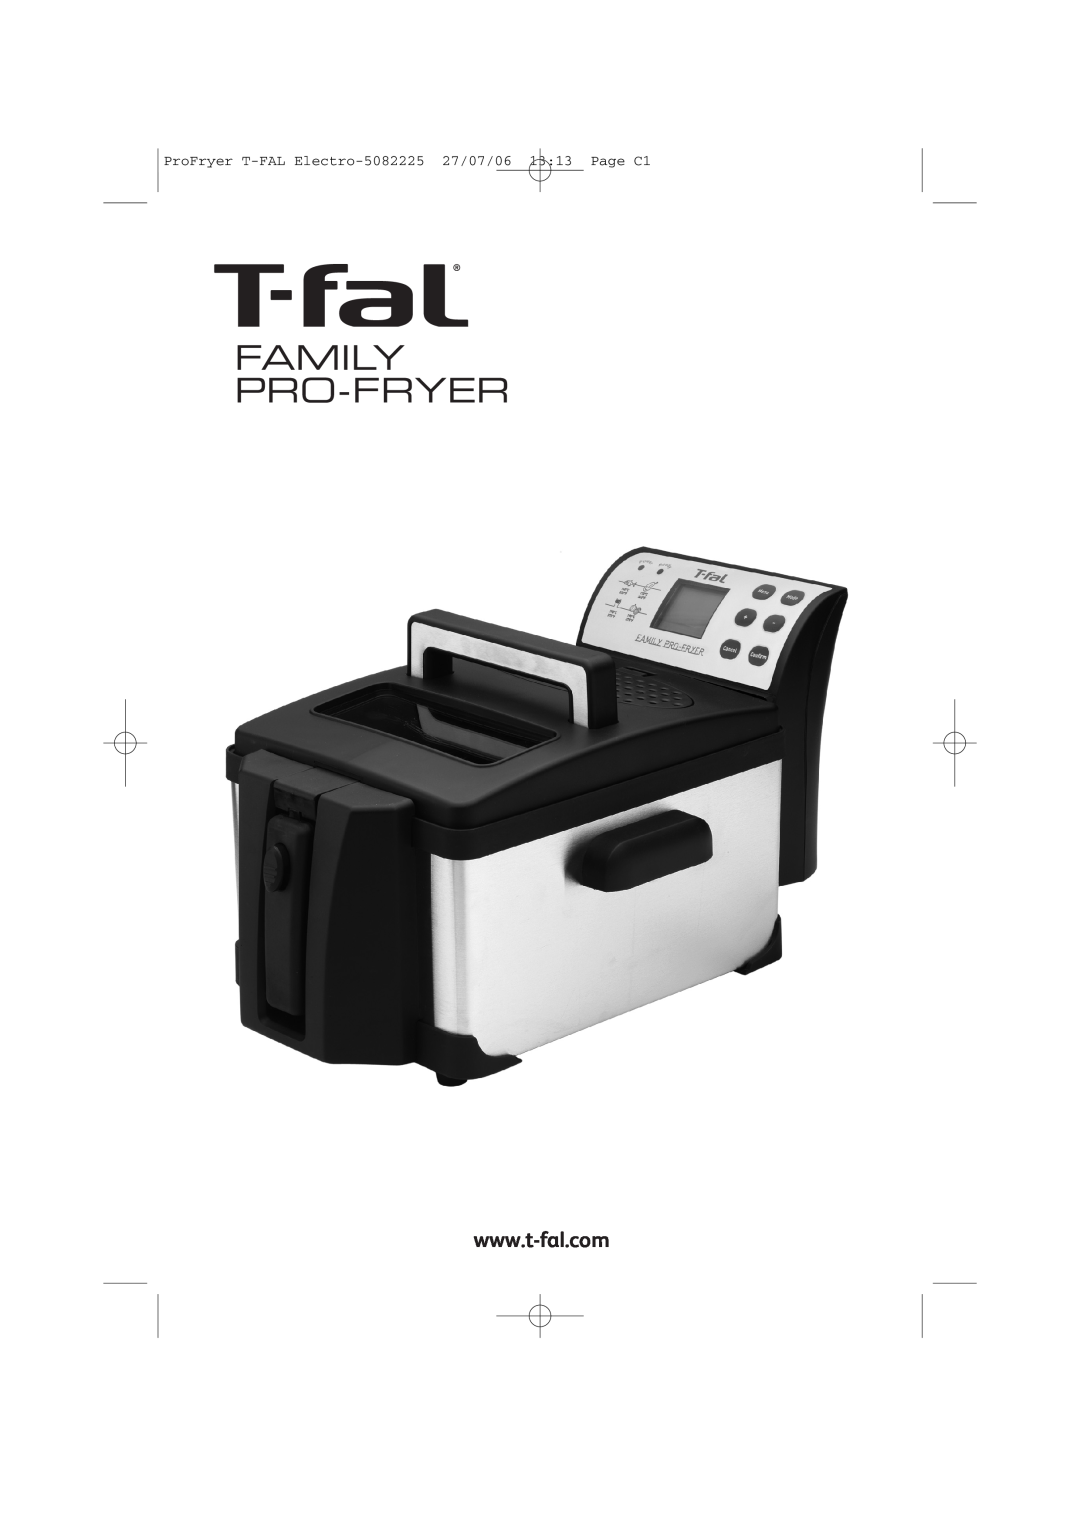 Groupe SEB USA - T-FAL manual Family Pro-Fryer, ProFryer T-FAL Electro-5082225 27/07/06 1313 Page C1 